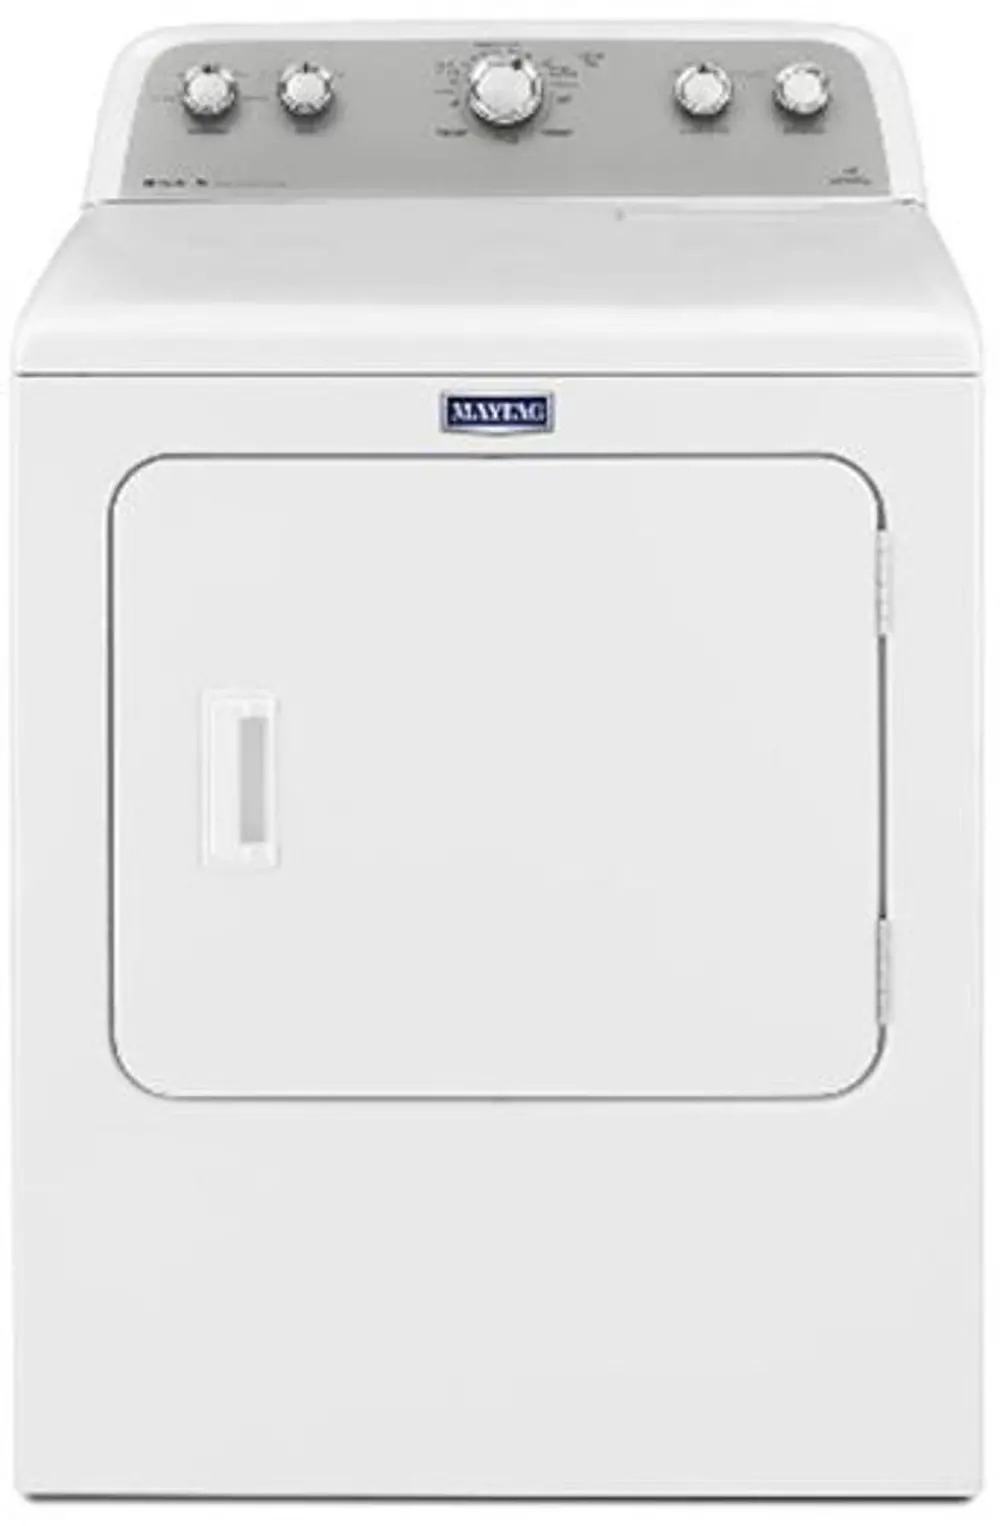 MGDX655DW Maytag Gas Dryer - 7.0 cu. ft. White-1